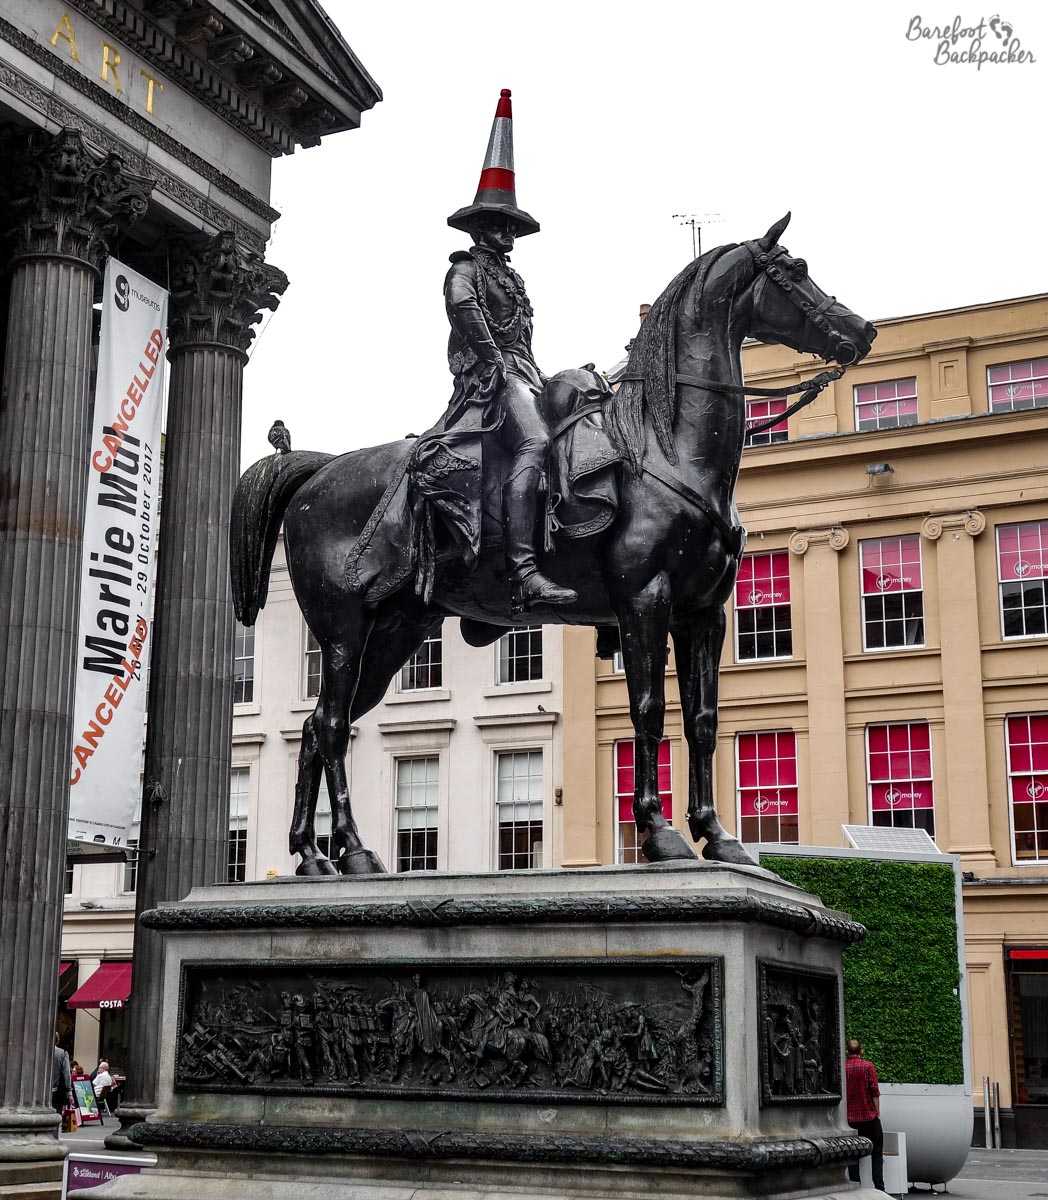 Glasgow - Duke Of Wellington Statue and traffic cone